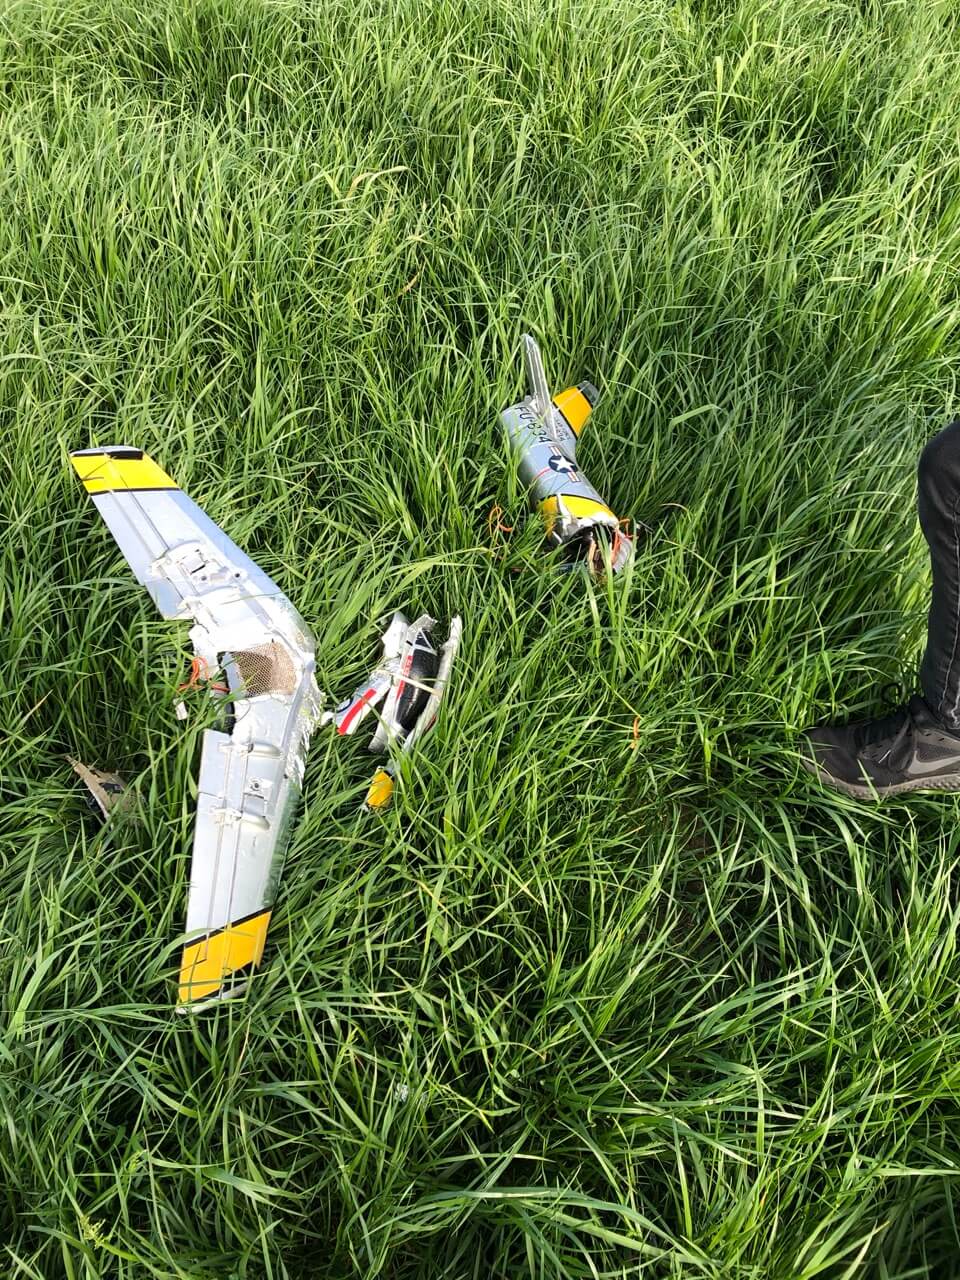 Crash des Modelllfugzeugs im Rasen